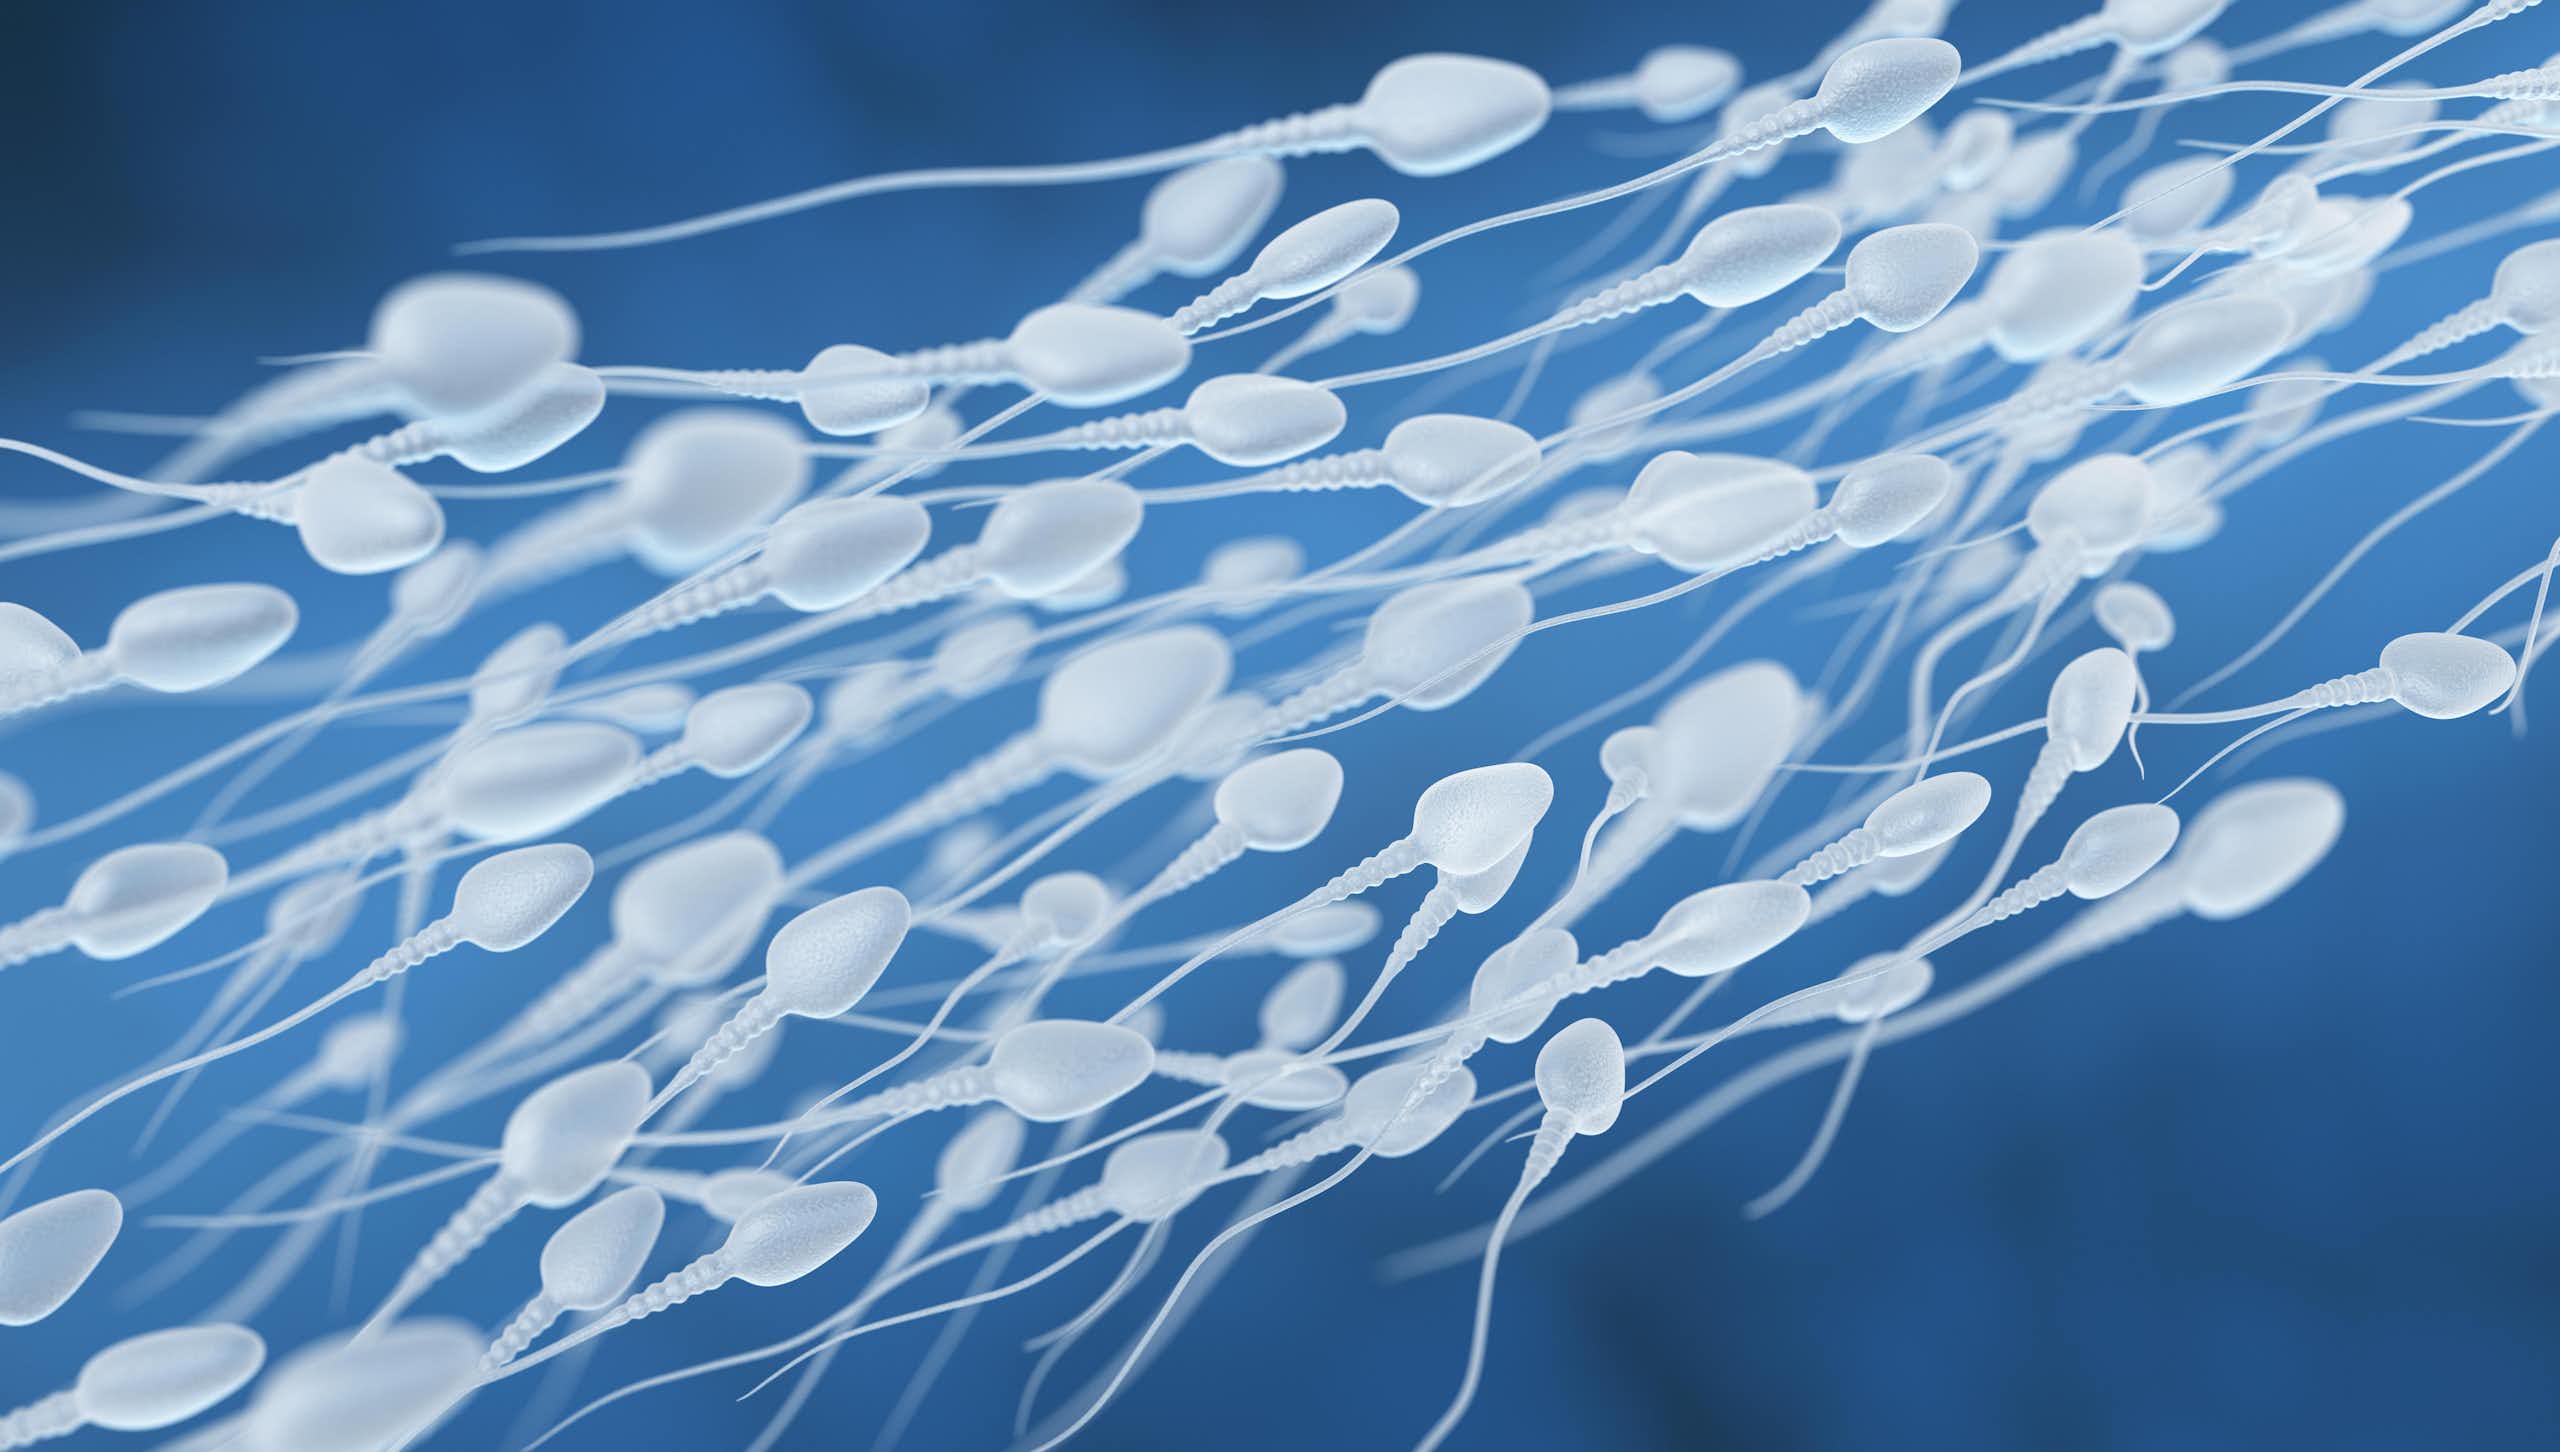 An illustration of sperm